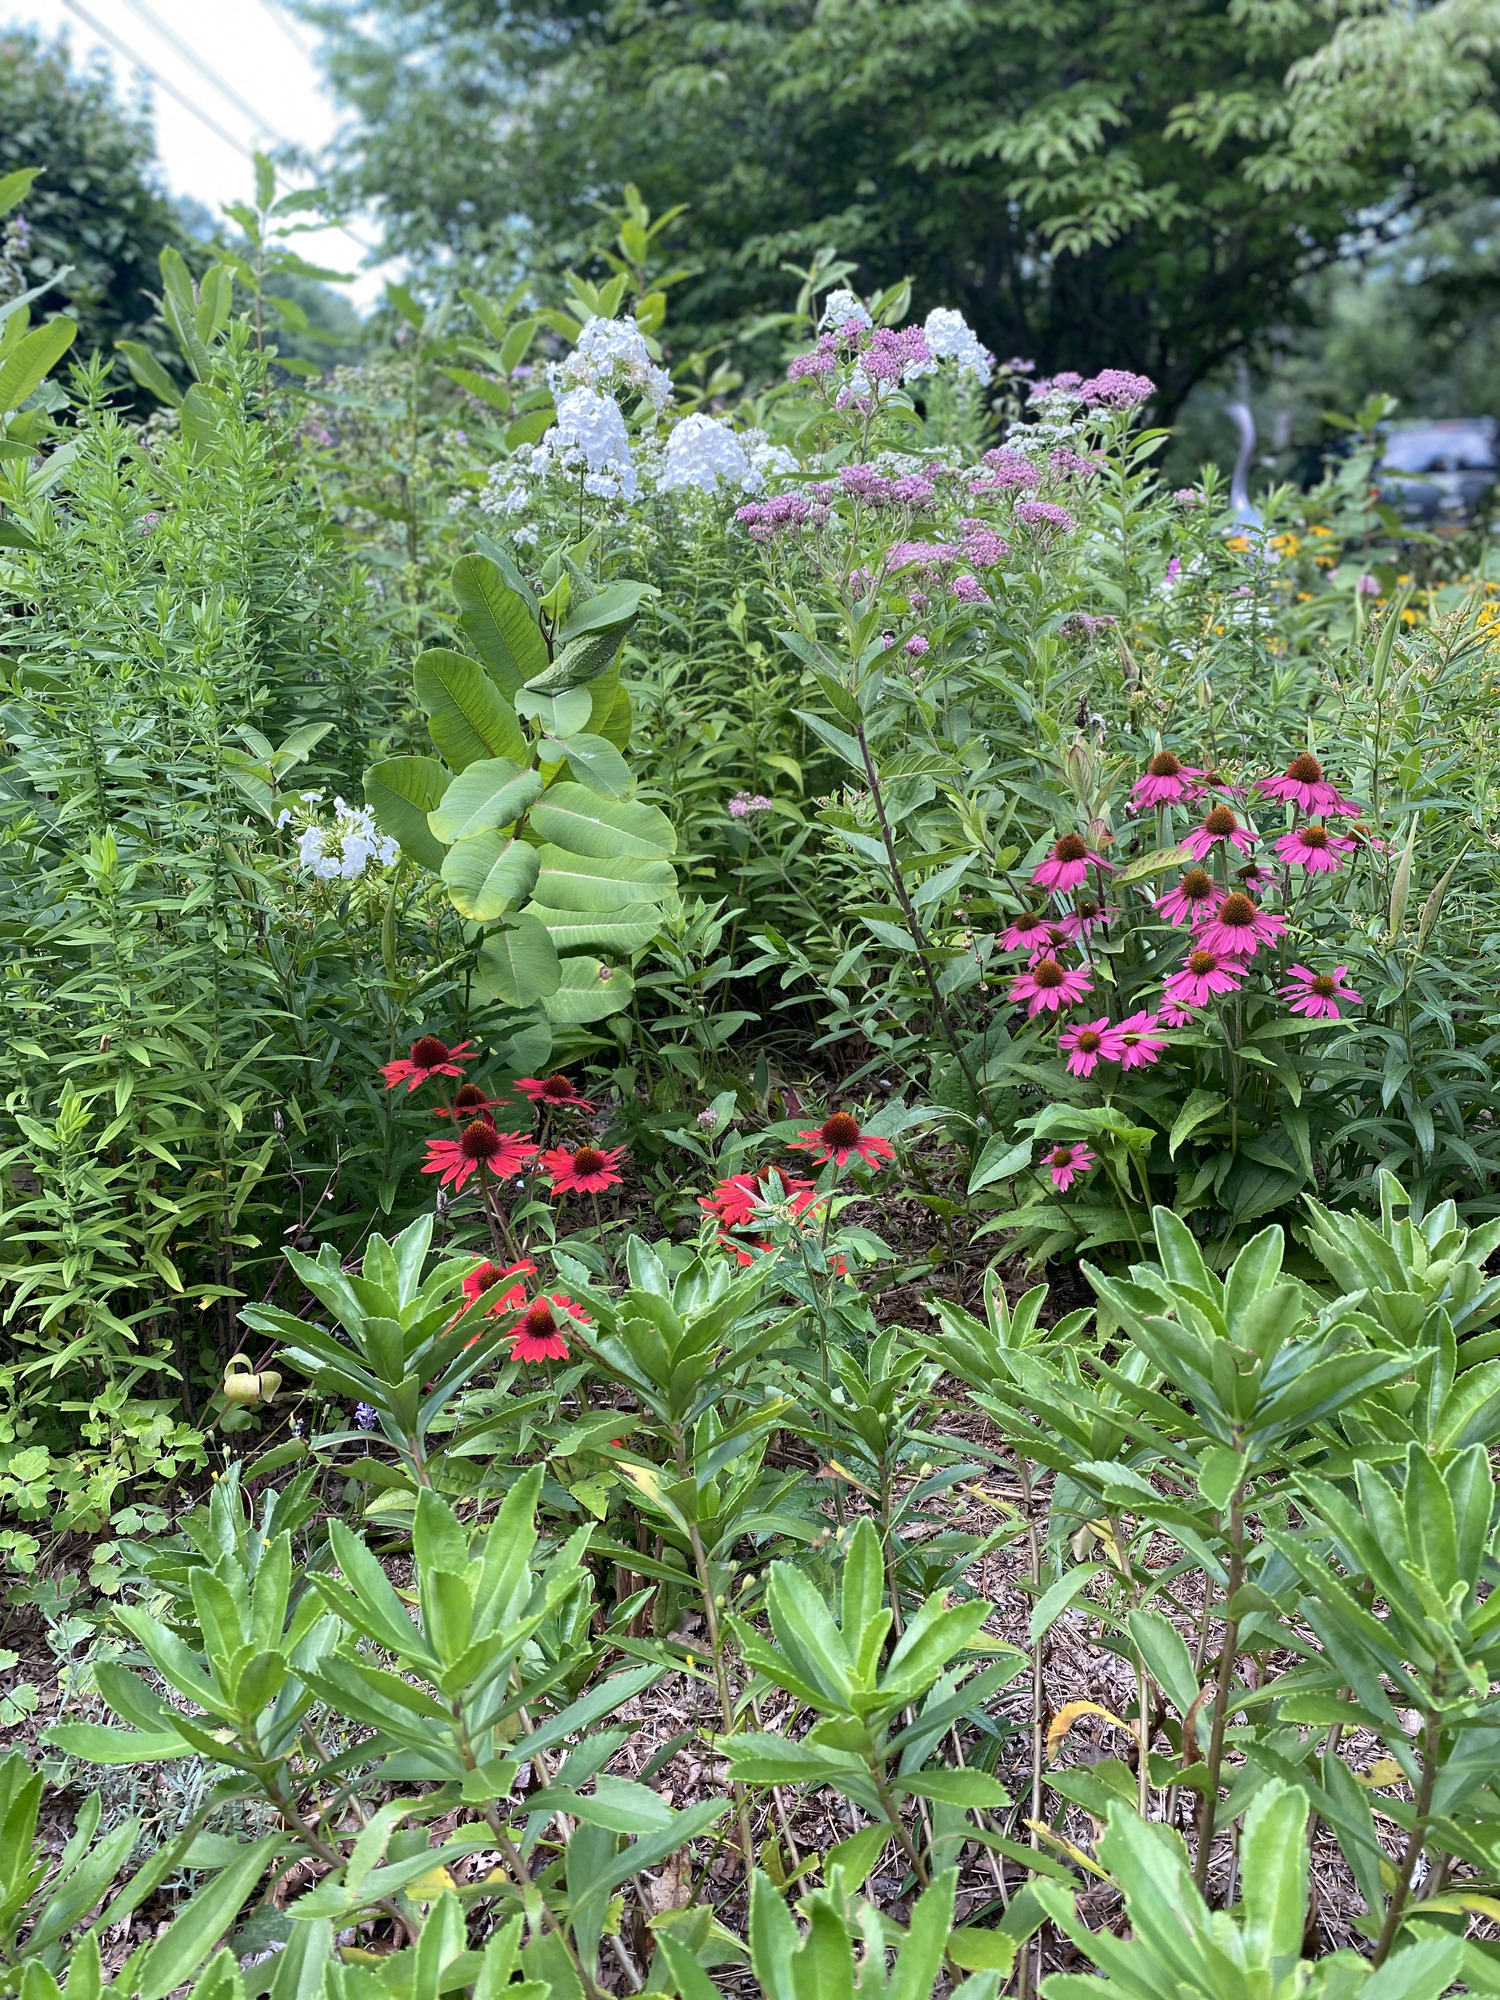 Mary Vienneau's East Quogue pollinator garden in bloom. MARY VIENNEAU